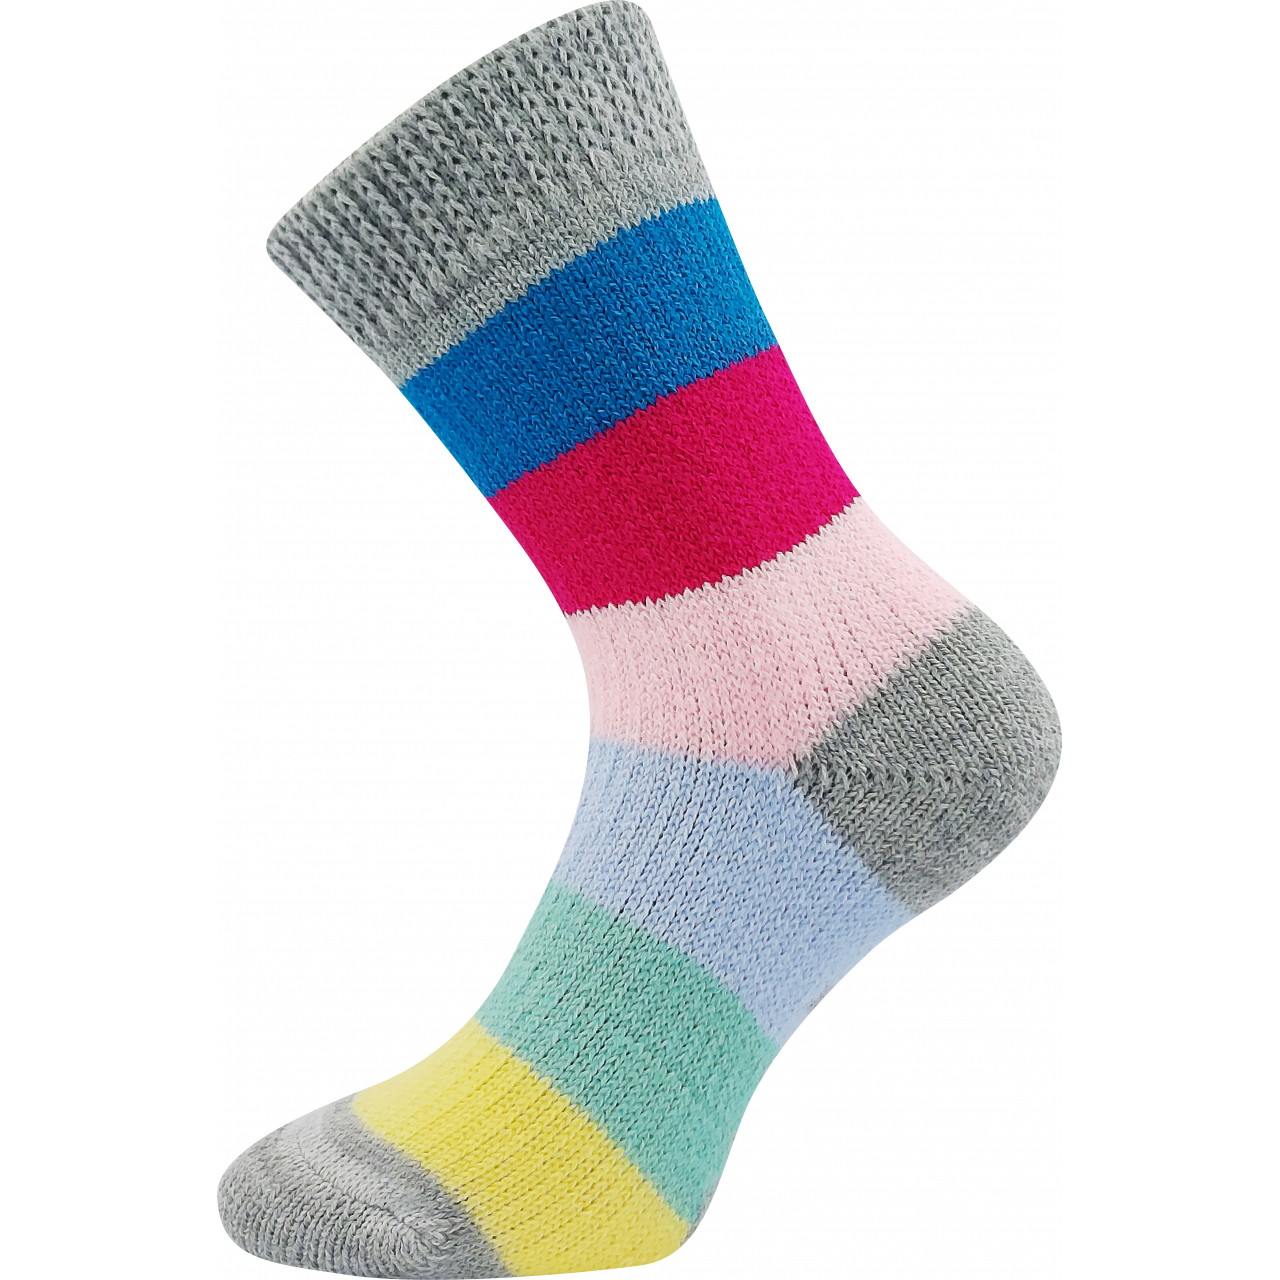 Ponožky spací unisex Boma Spací Pruh 2 - barevné, 39-42